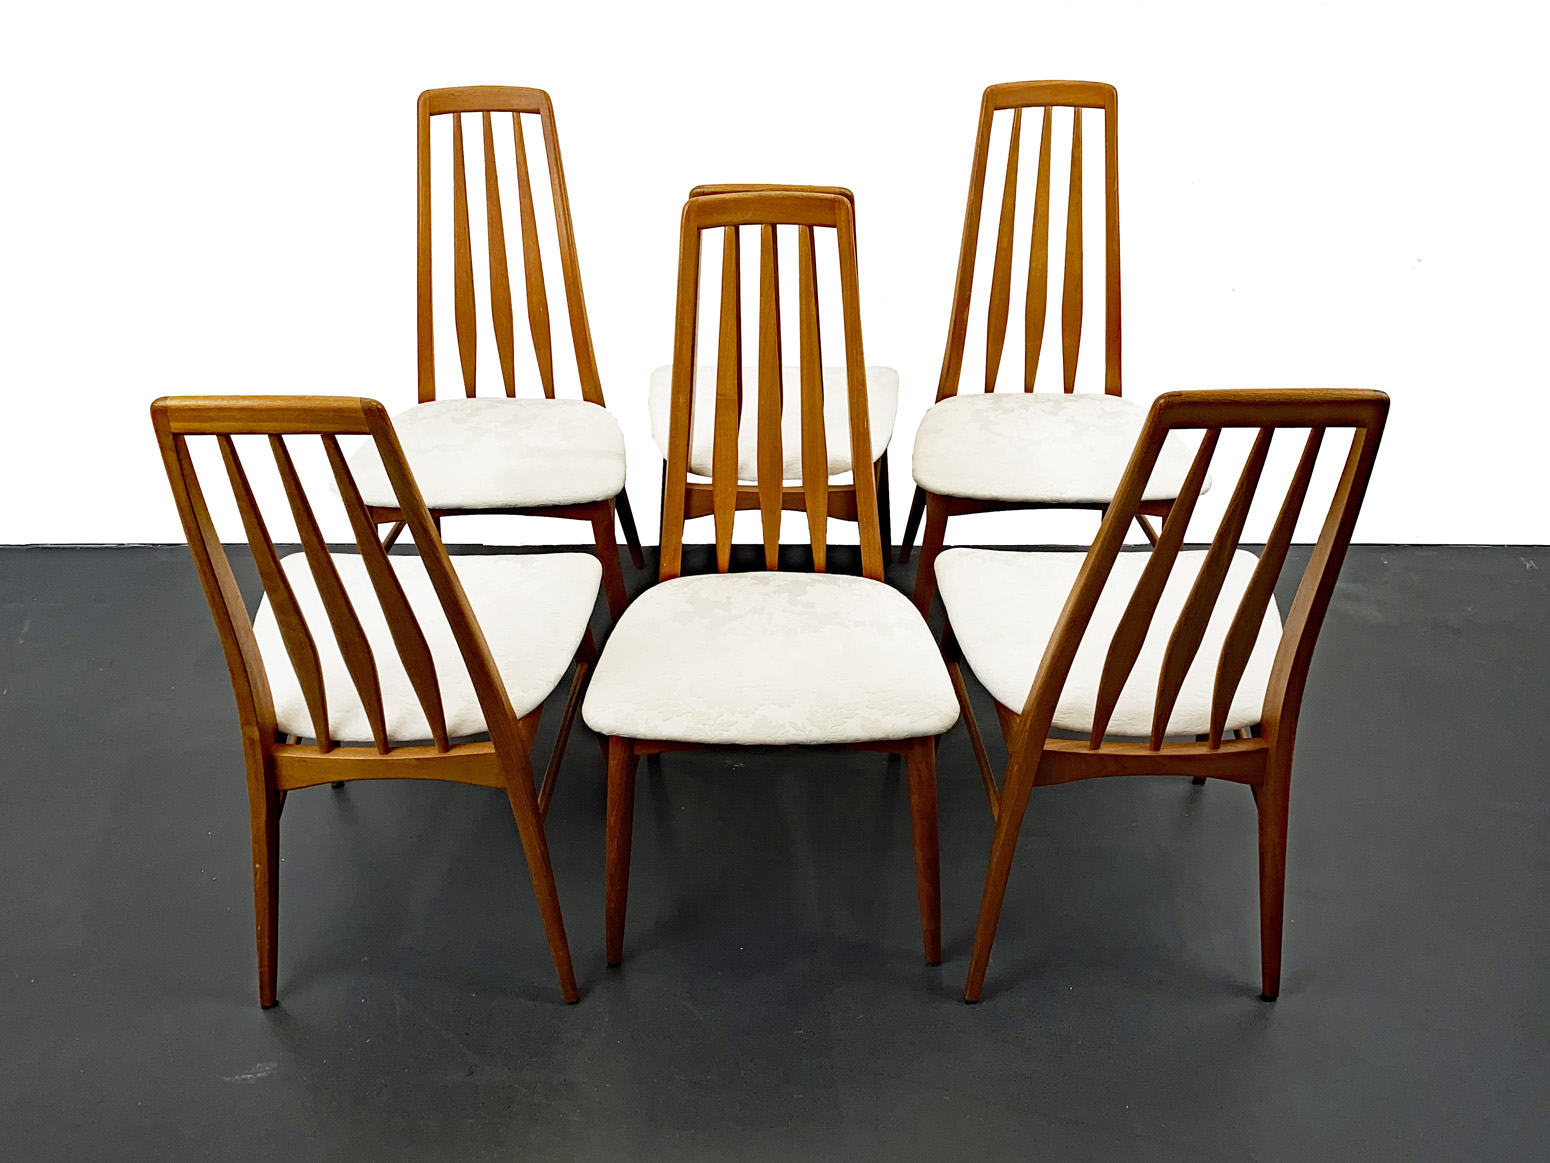 Set of 6 Teak Wood Dining Chairs Eva by Niels Koefoed for Koefoeds Hornslet, 1964, Denmark, 1960s.